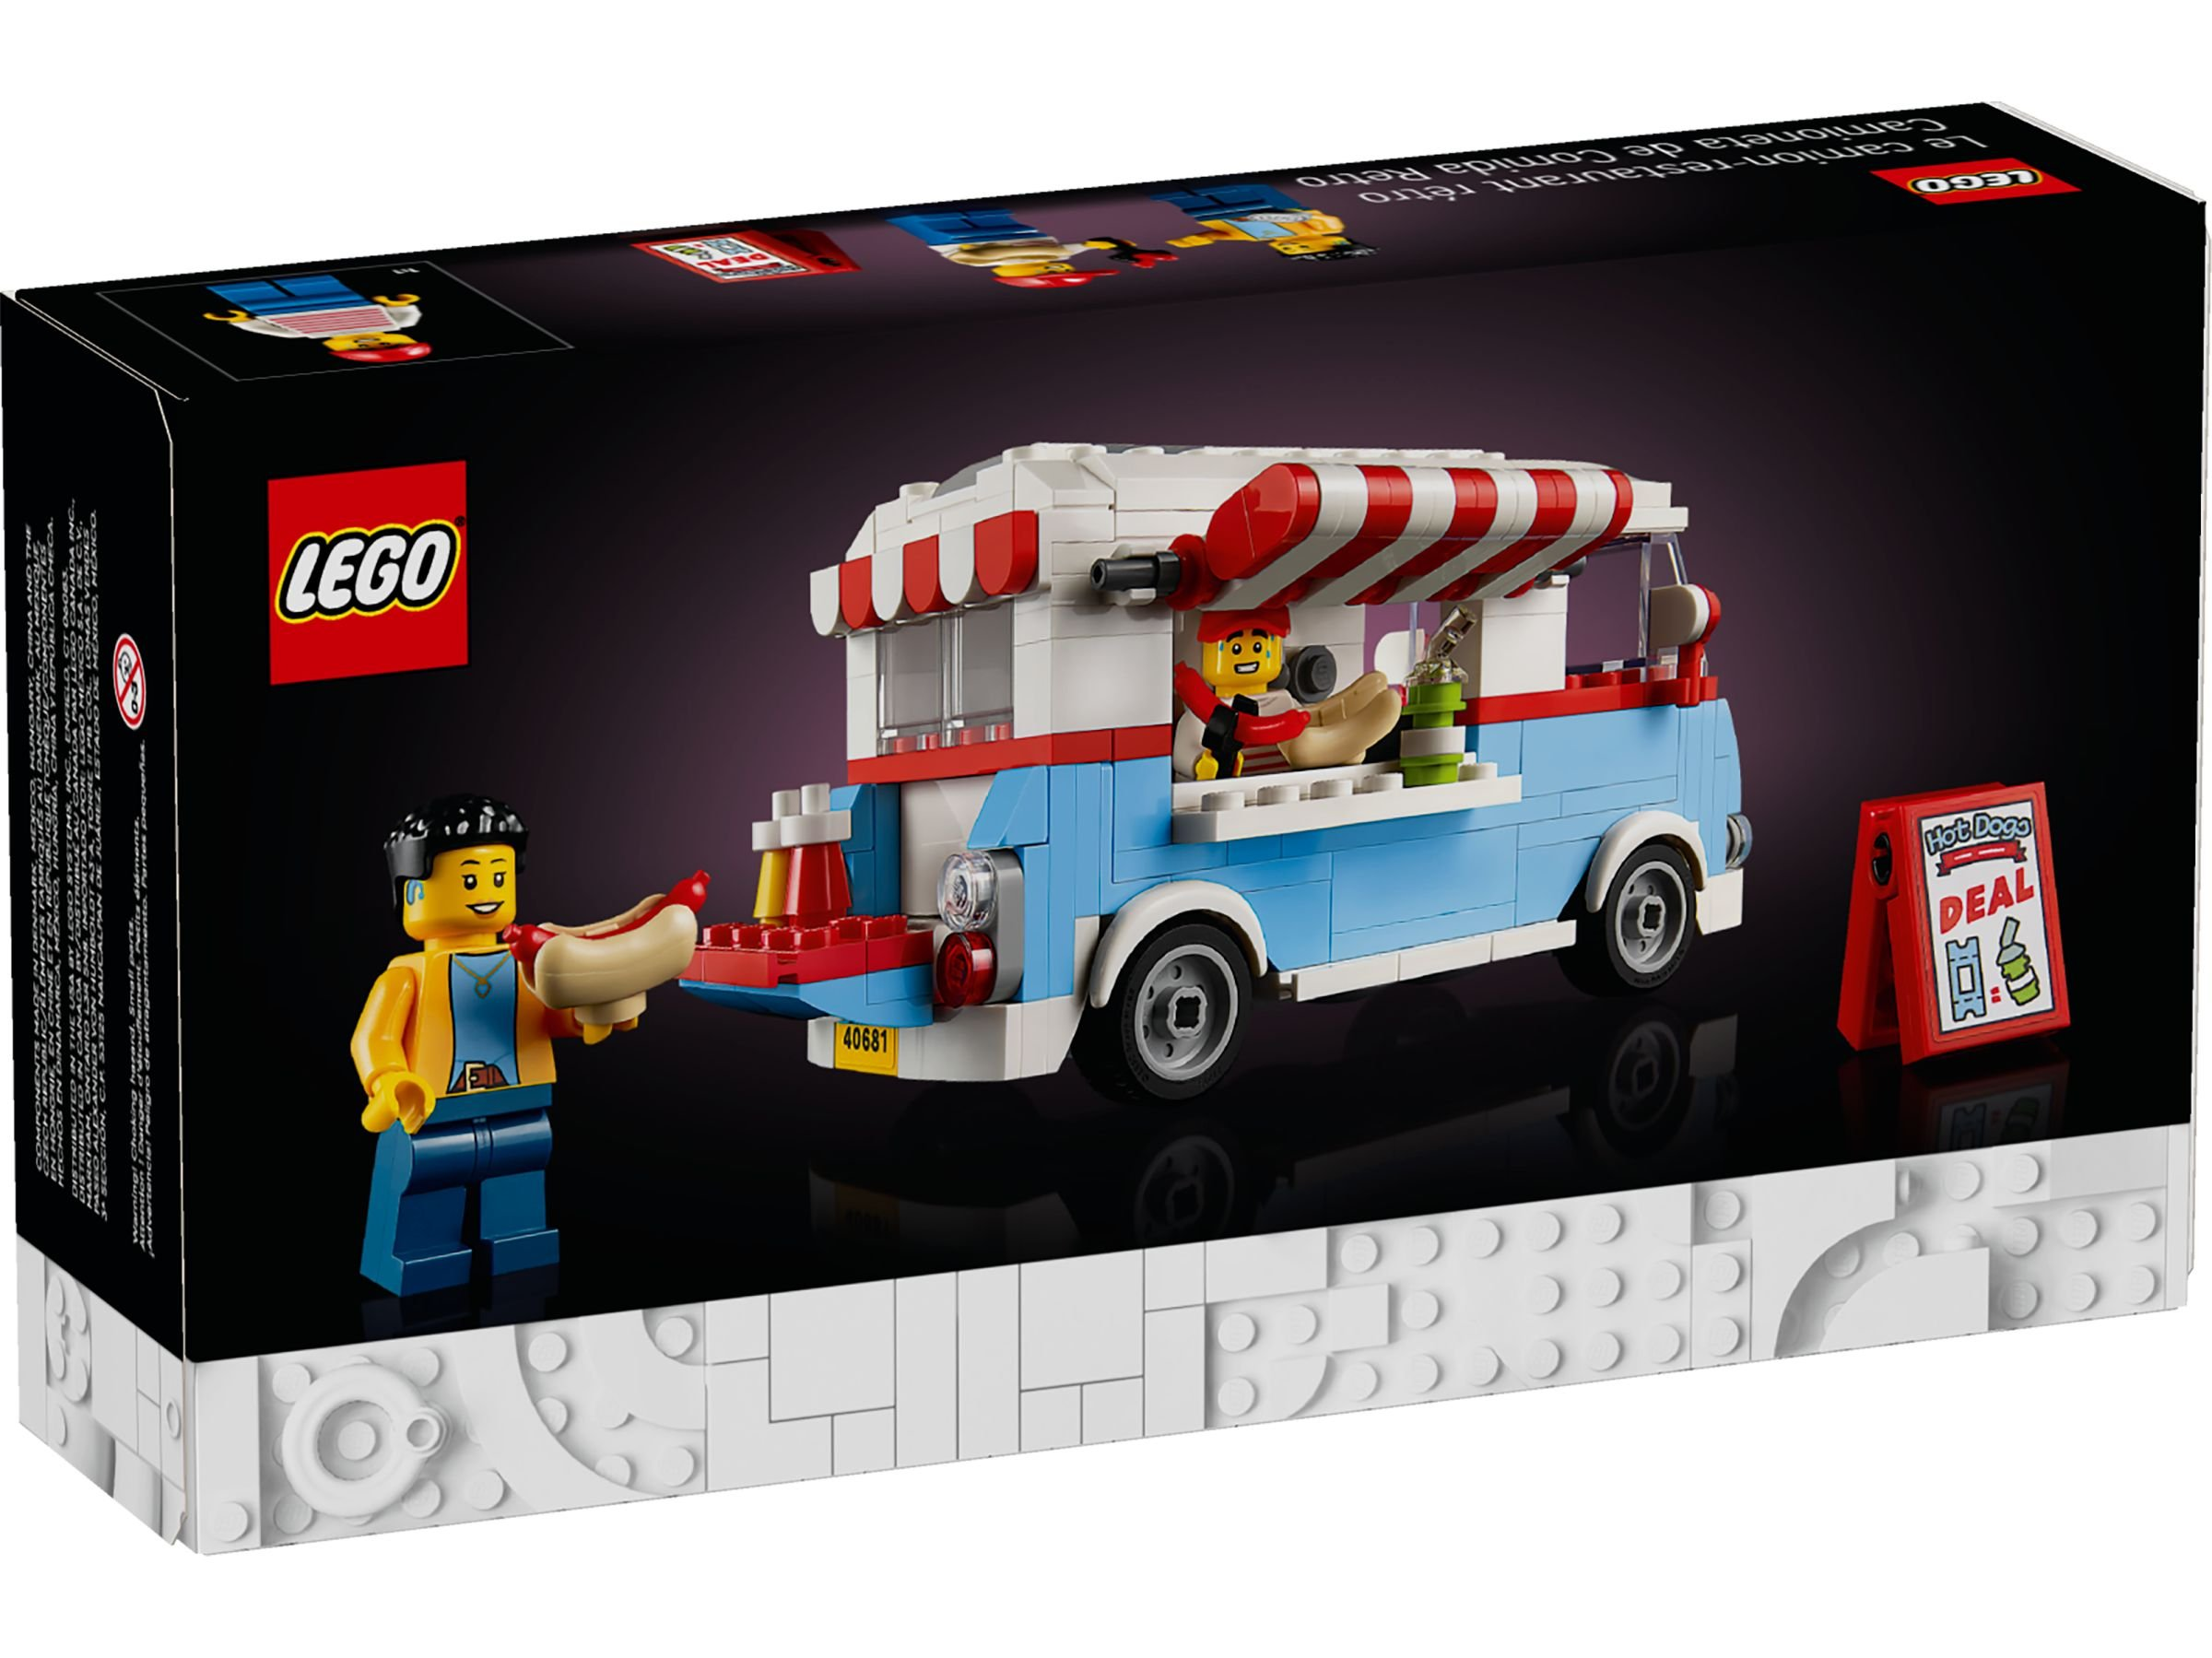 Bausatz LEGO Food Icons Truck 40681 Retro LEGO®